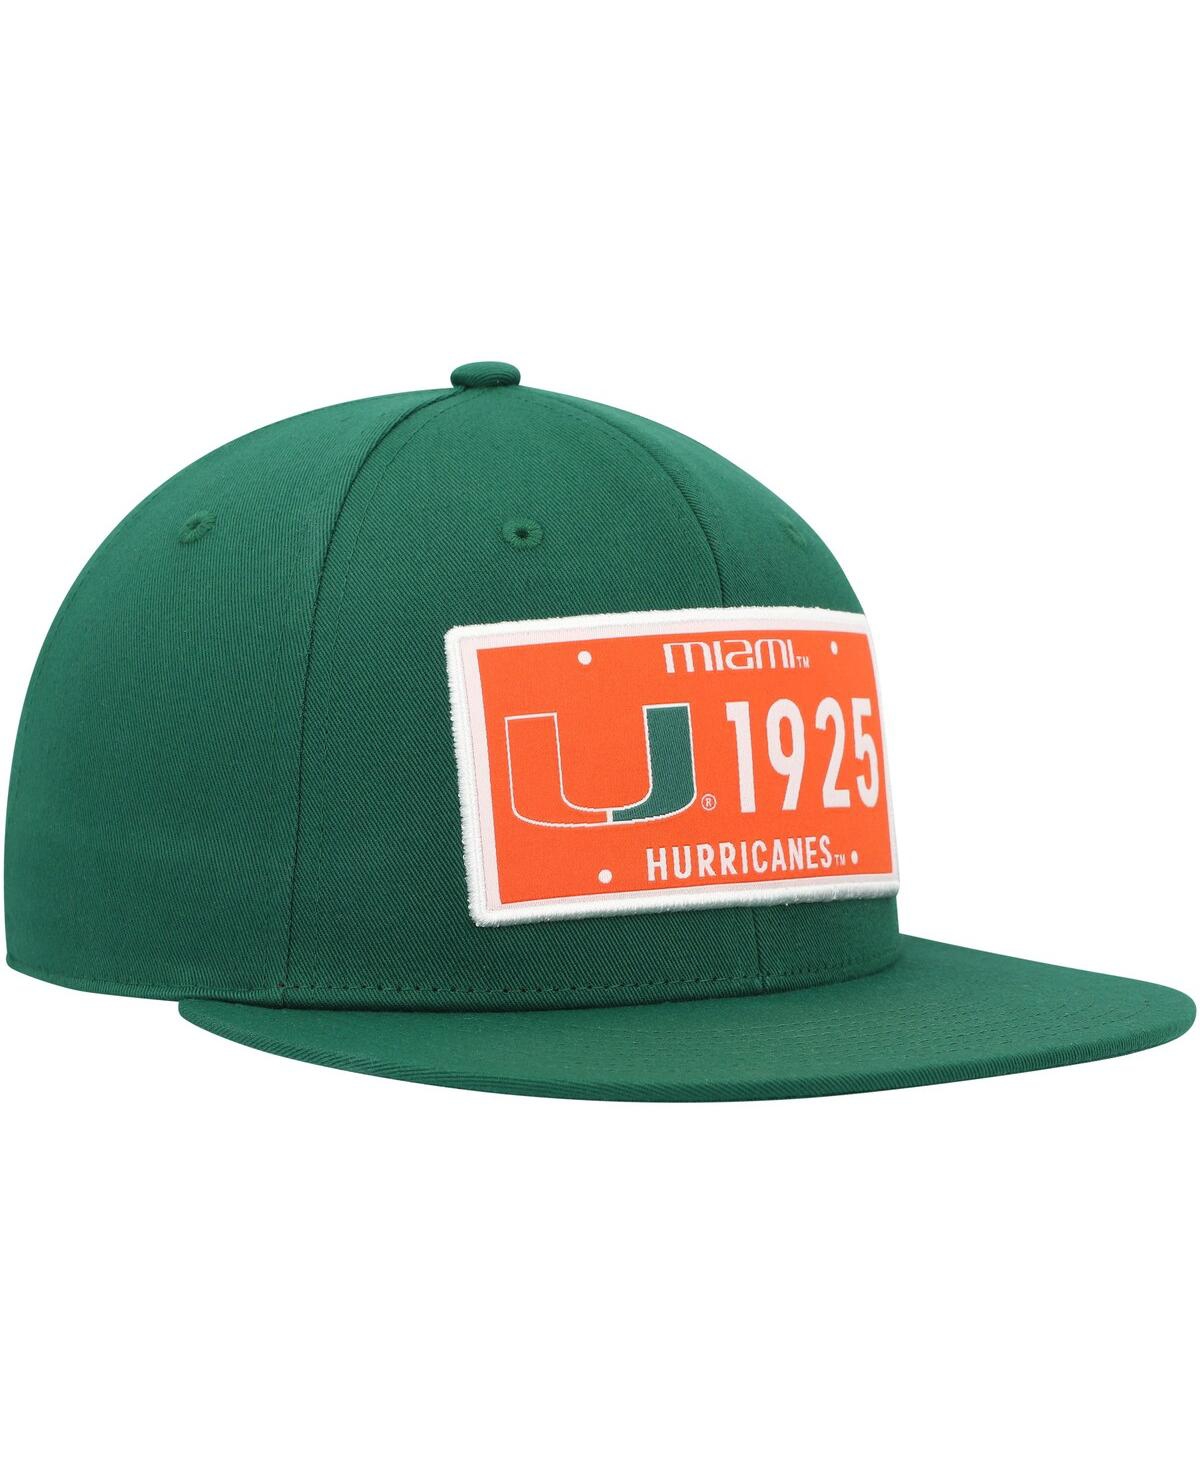 Shop Adidas Originals Men's Adidas Green Miami Hurricanes Established Snapback Hat